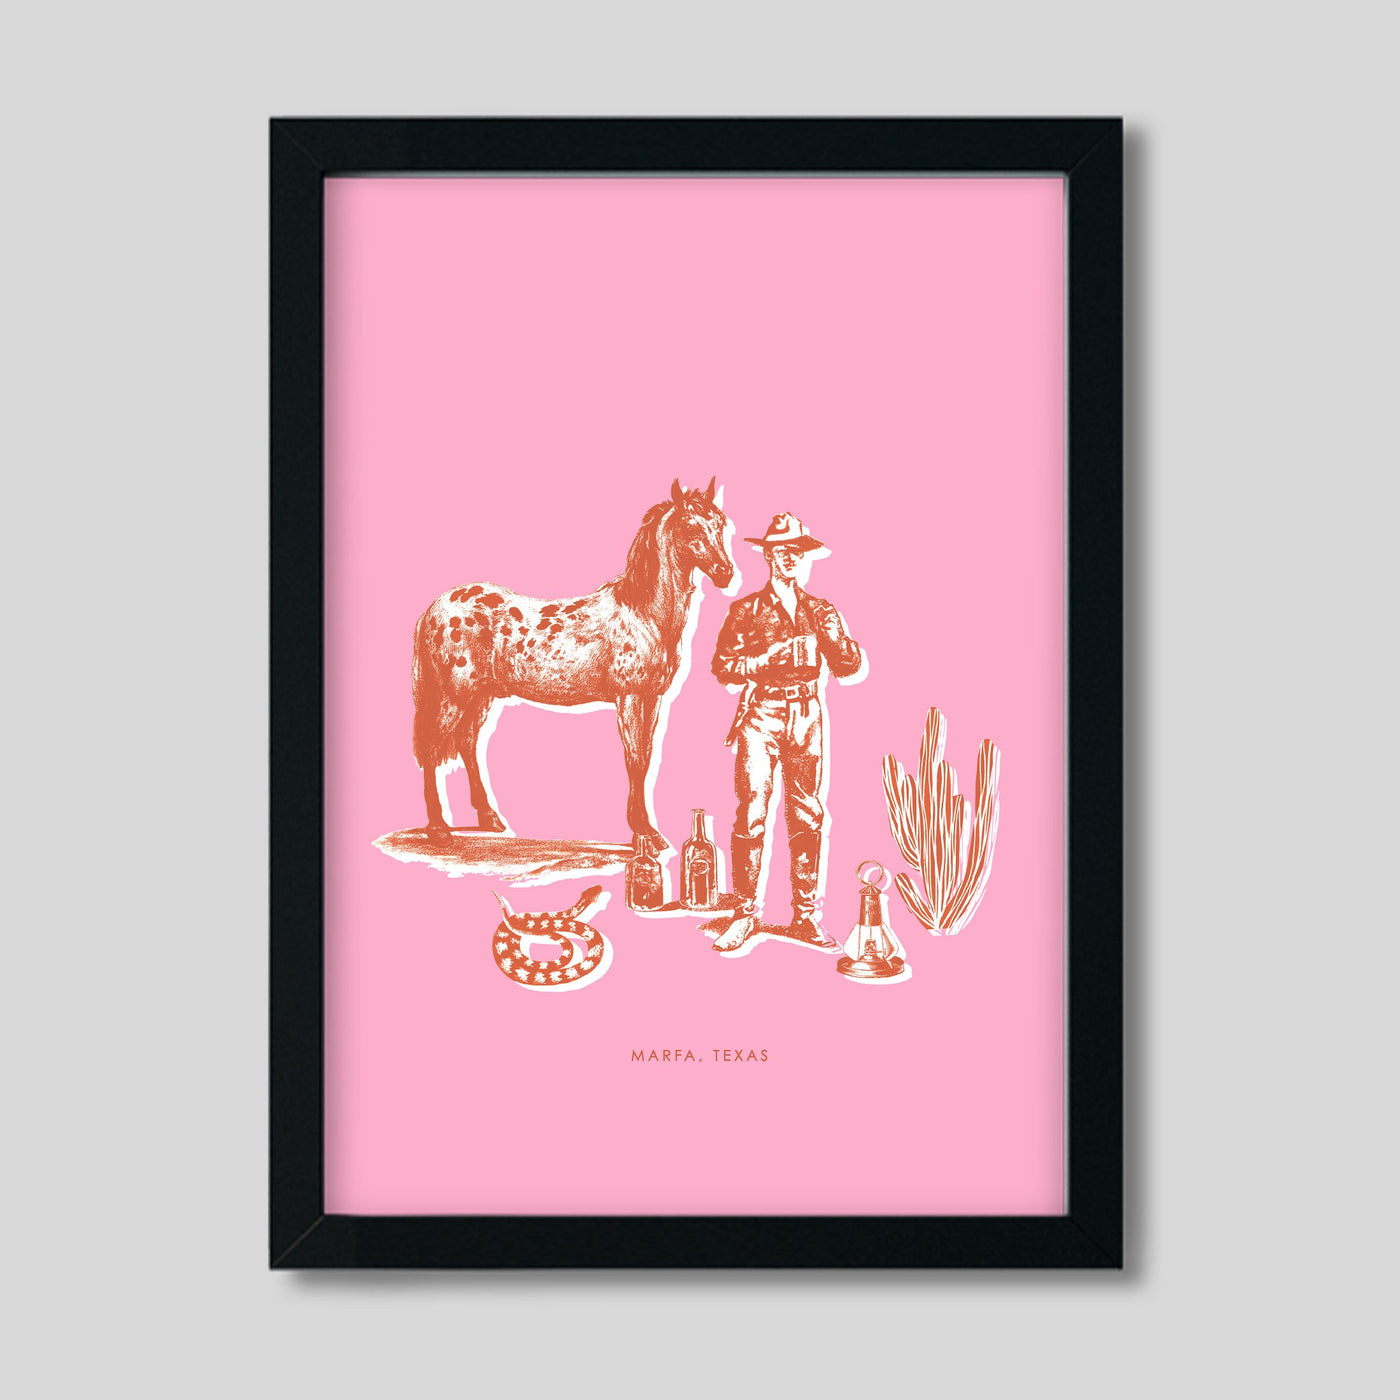 Gallery Prints Pink / 8x10 / Black Frame Marfa Cowboy Print dombezalergii